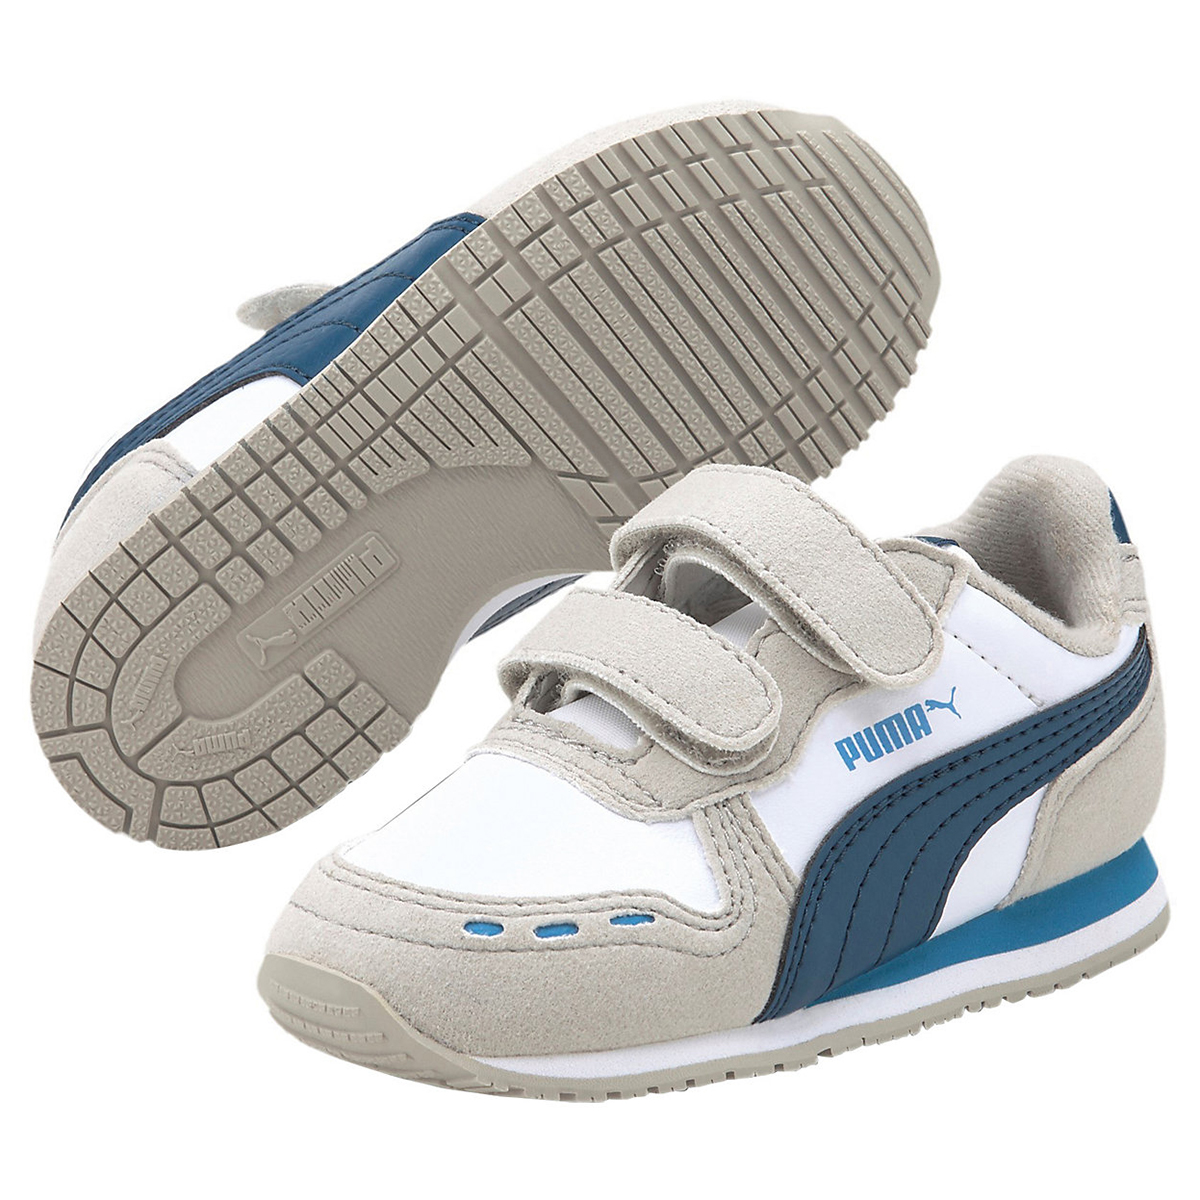 PUMA Cabana Racer SL V Inf Kinder Sneaker Klettverschluss Weiß / Blau 351980